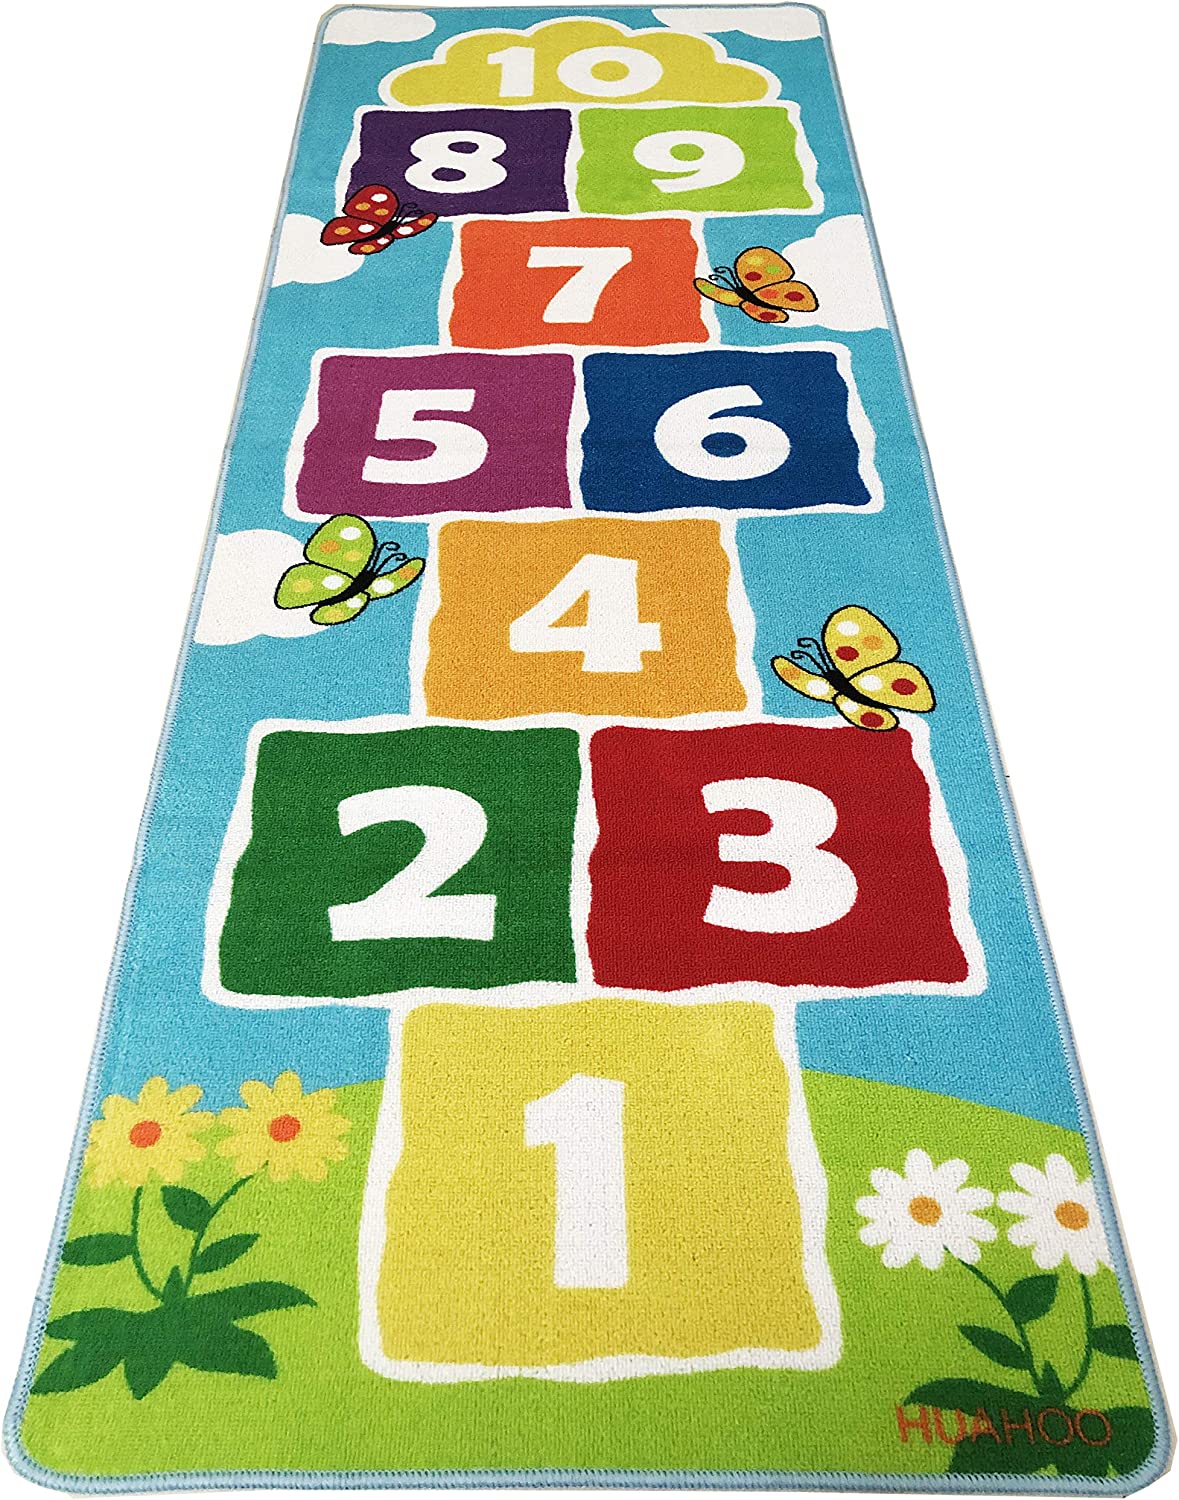 Game Runner Rug for Kids Bedroom Playroom, Children Carpet